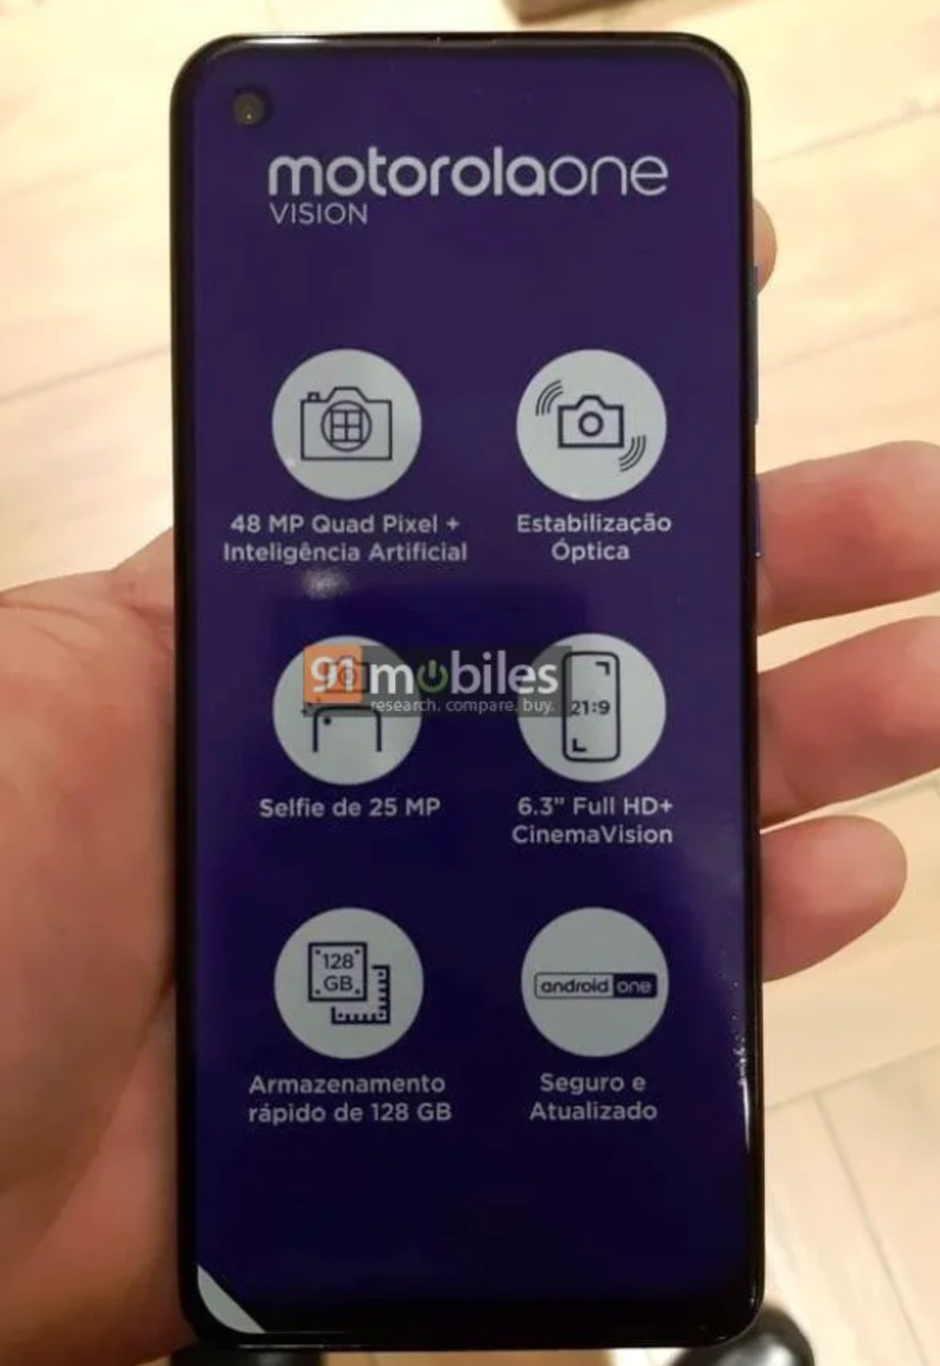 Motorola One Vision hands-on image leaks, key specs corroborated